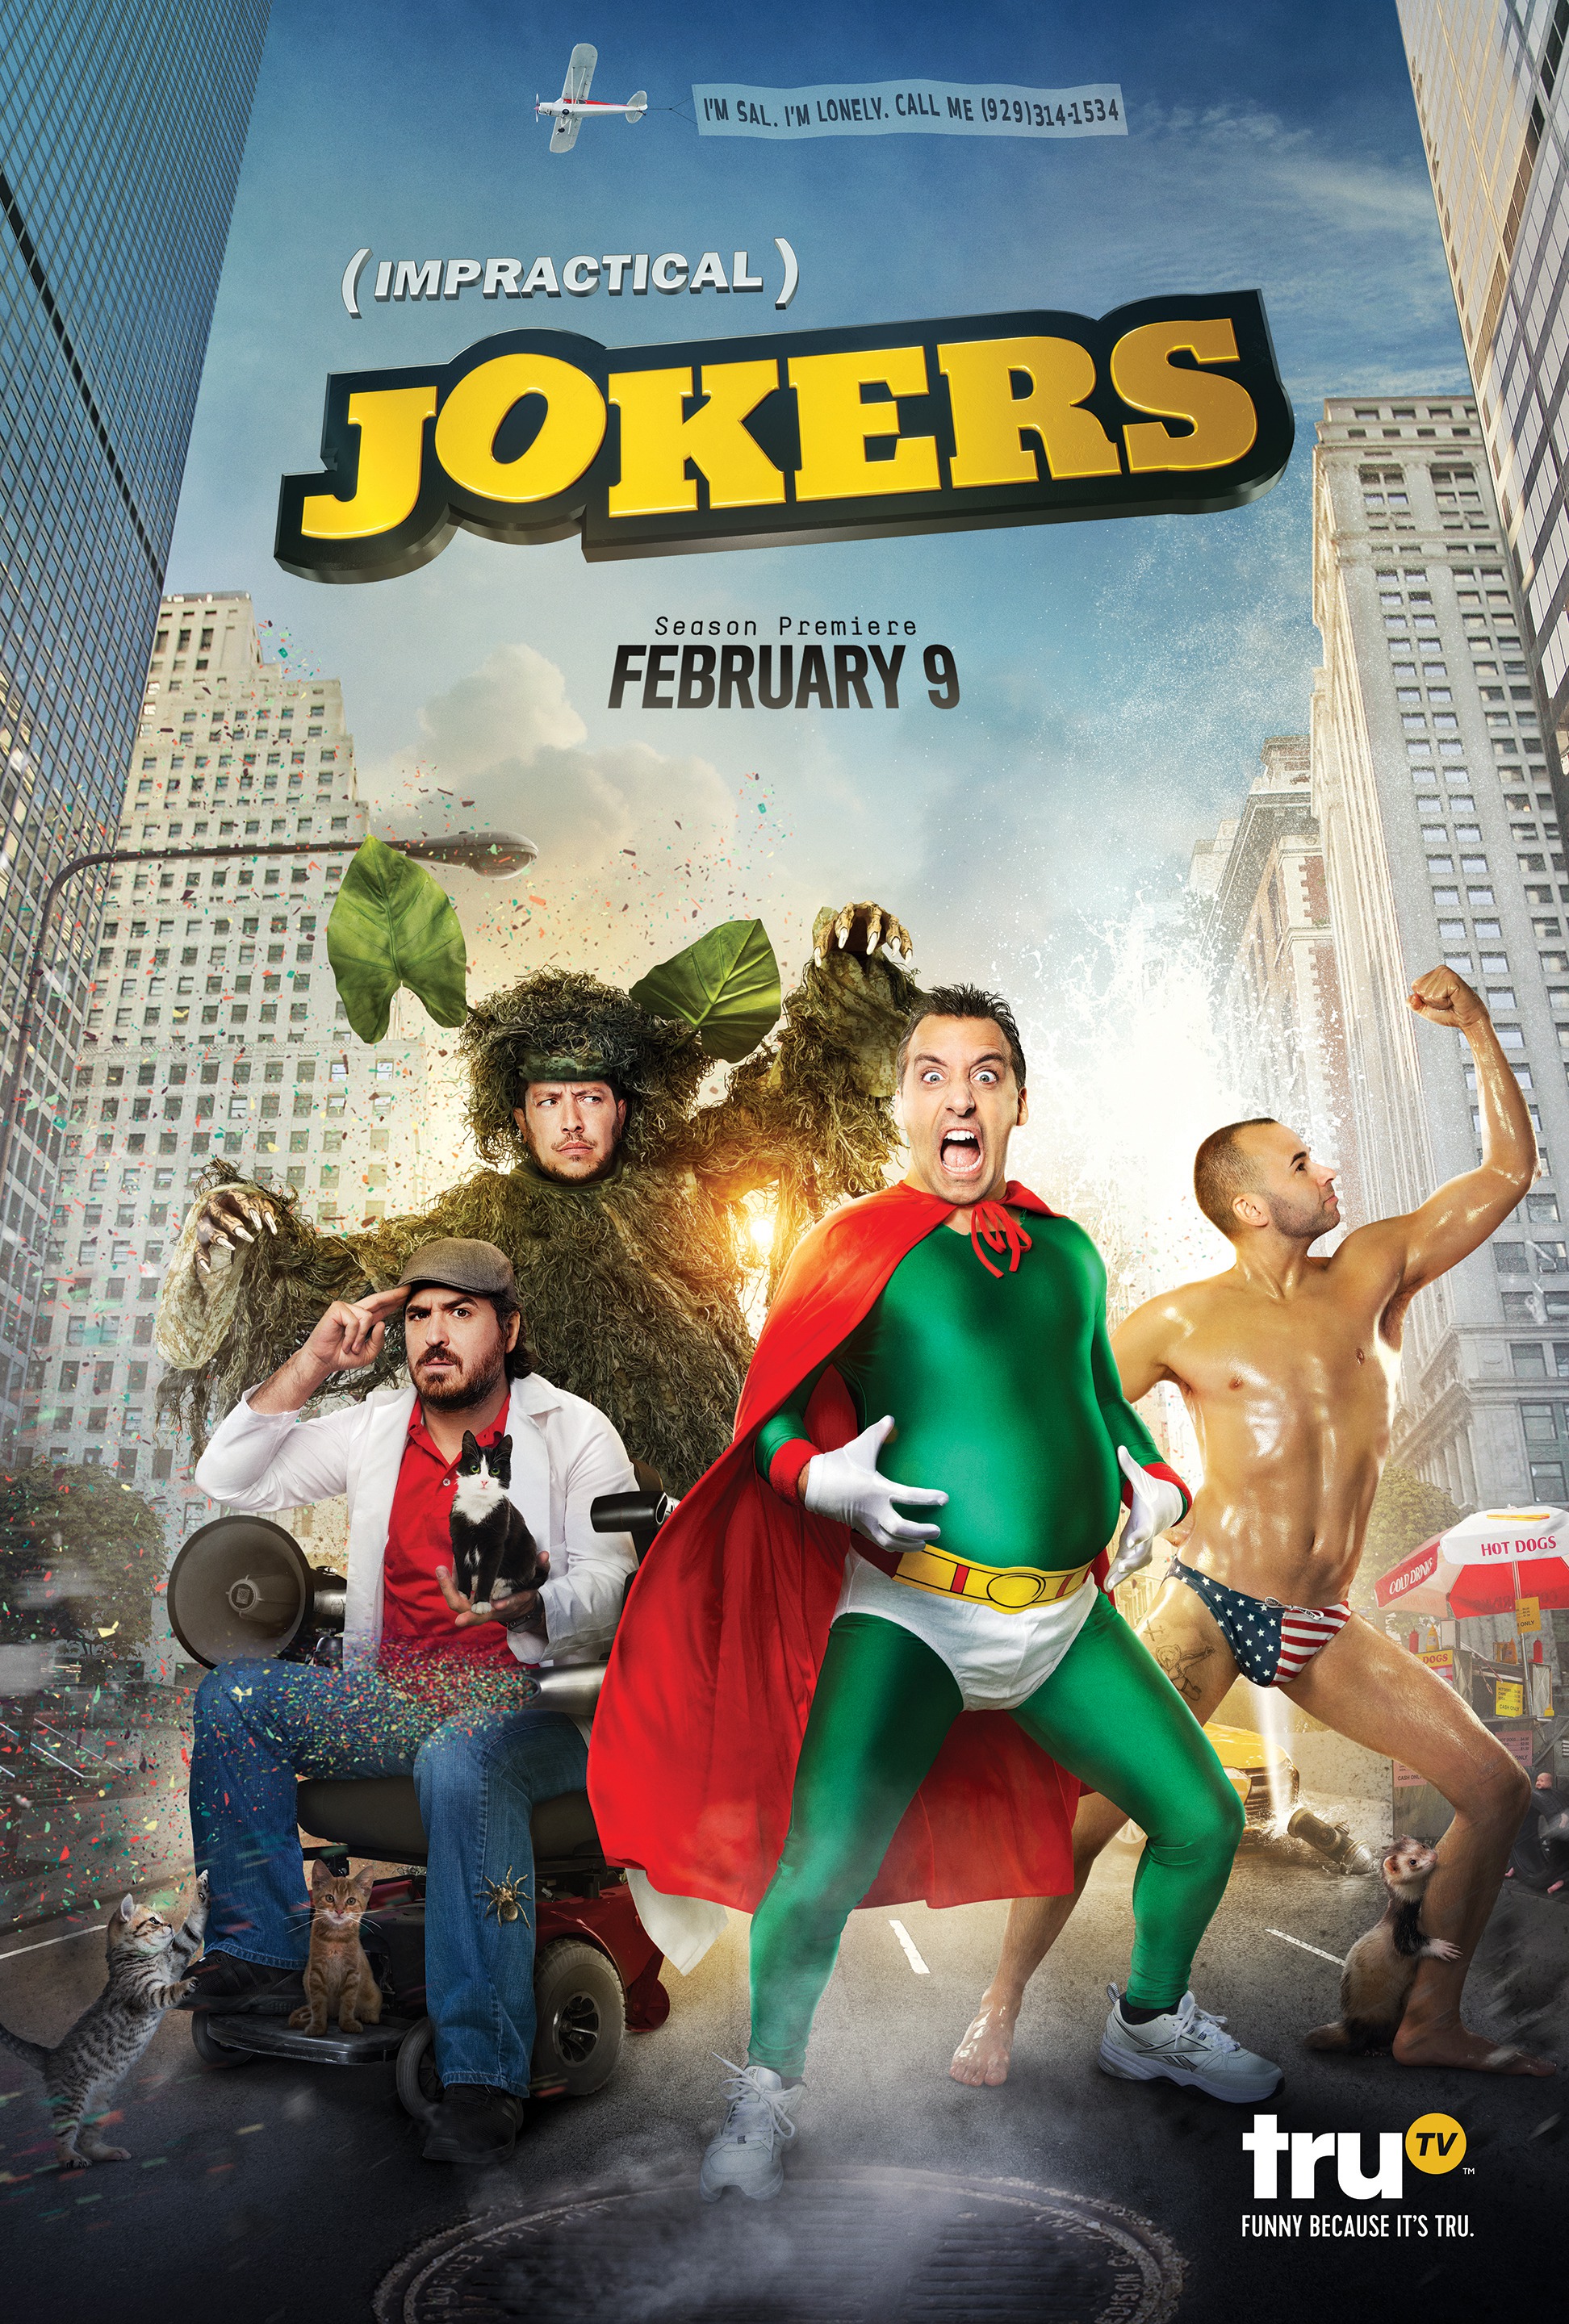 Mega Sized TV Poster Image for Impractical Jokers (#7 of 9)